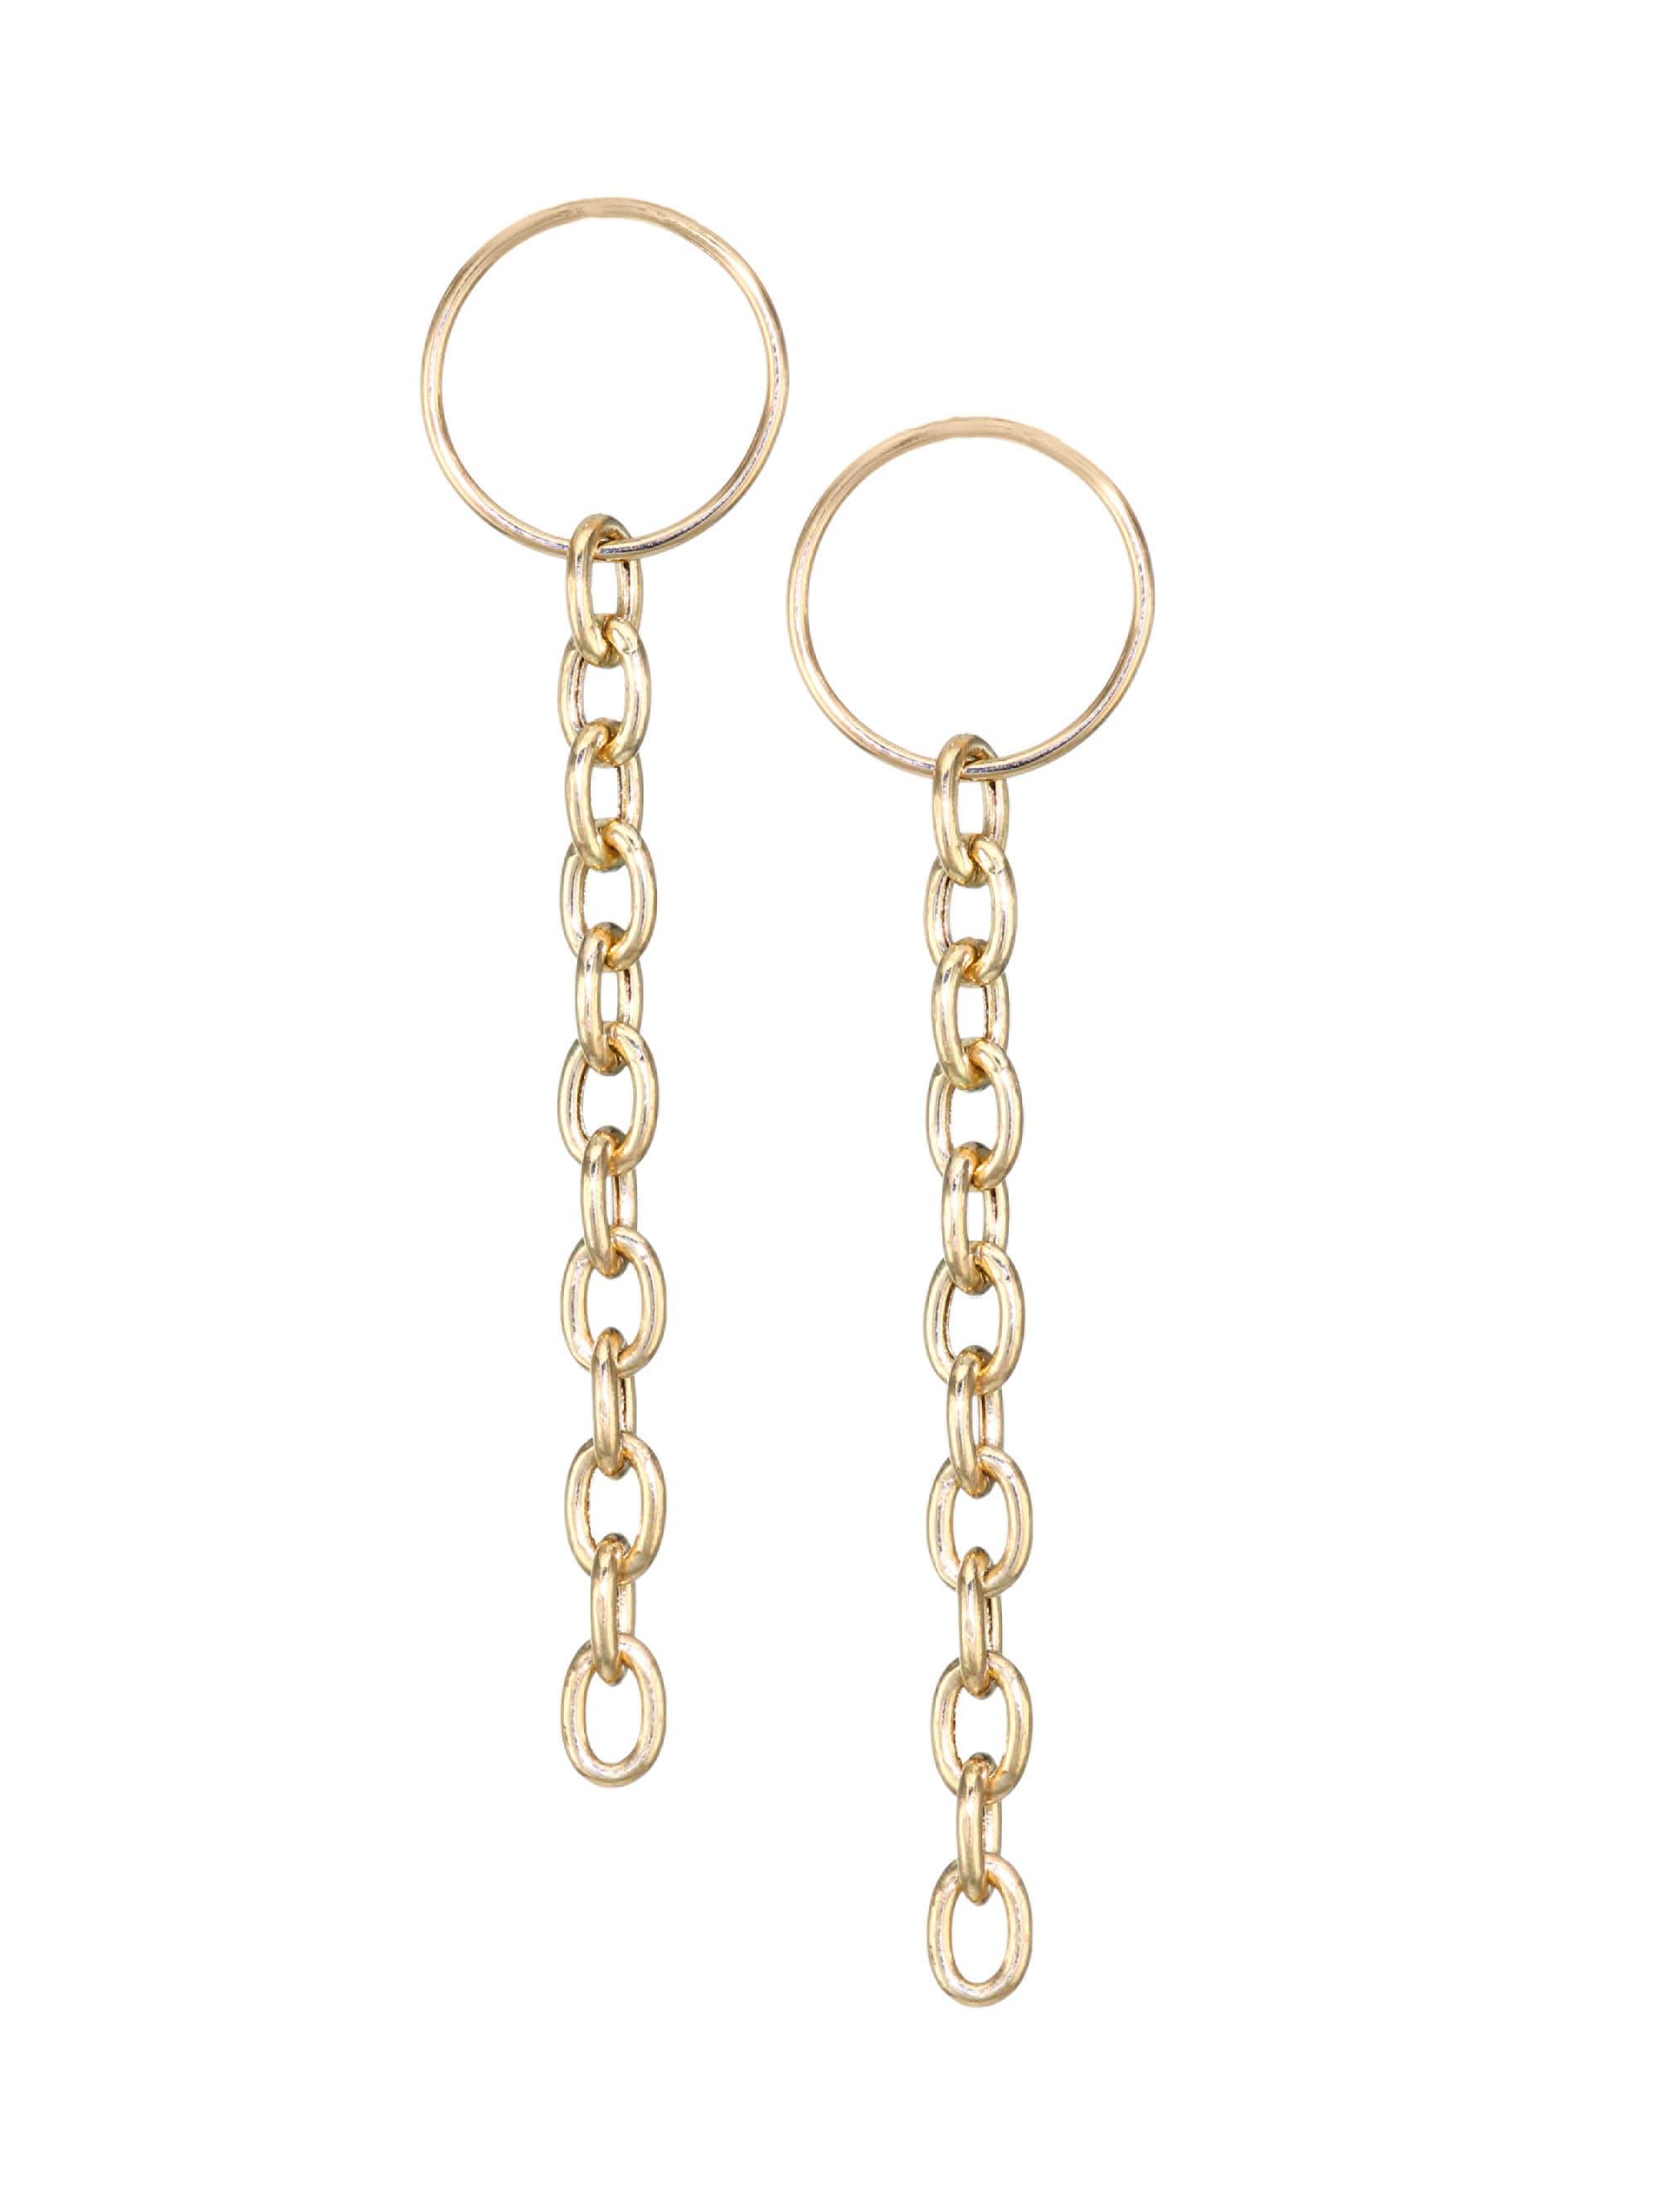 Lyst - Zoe Chicco 14k Yellow Gold Circle & Chain Drop Earrings in Yellow